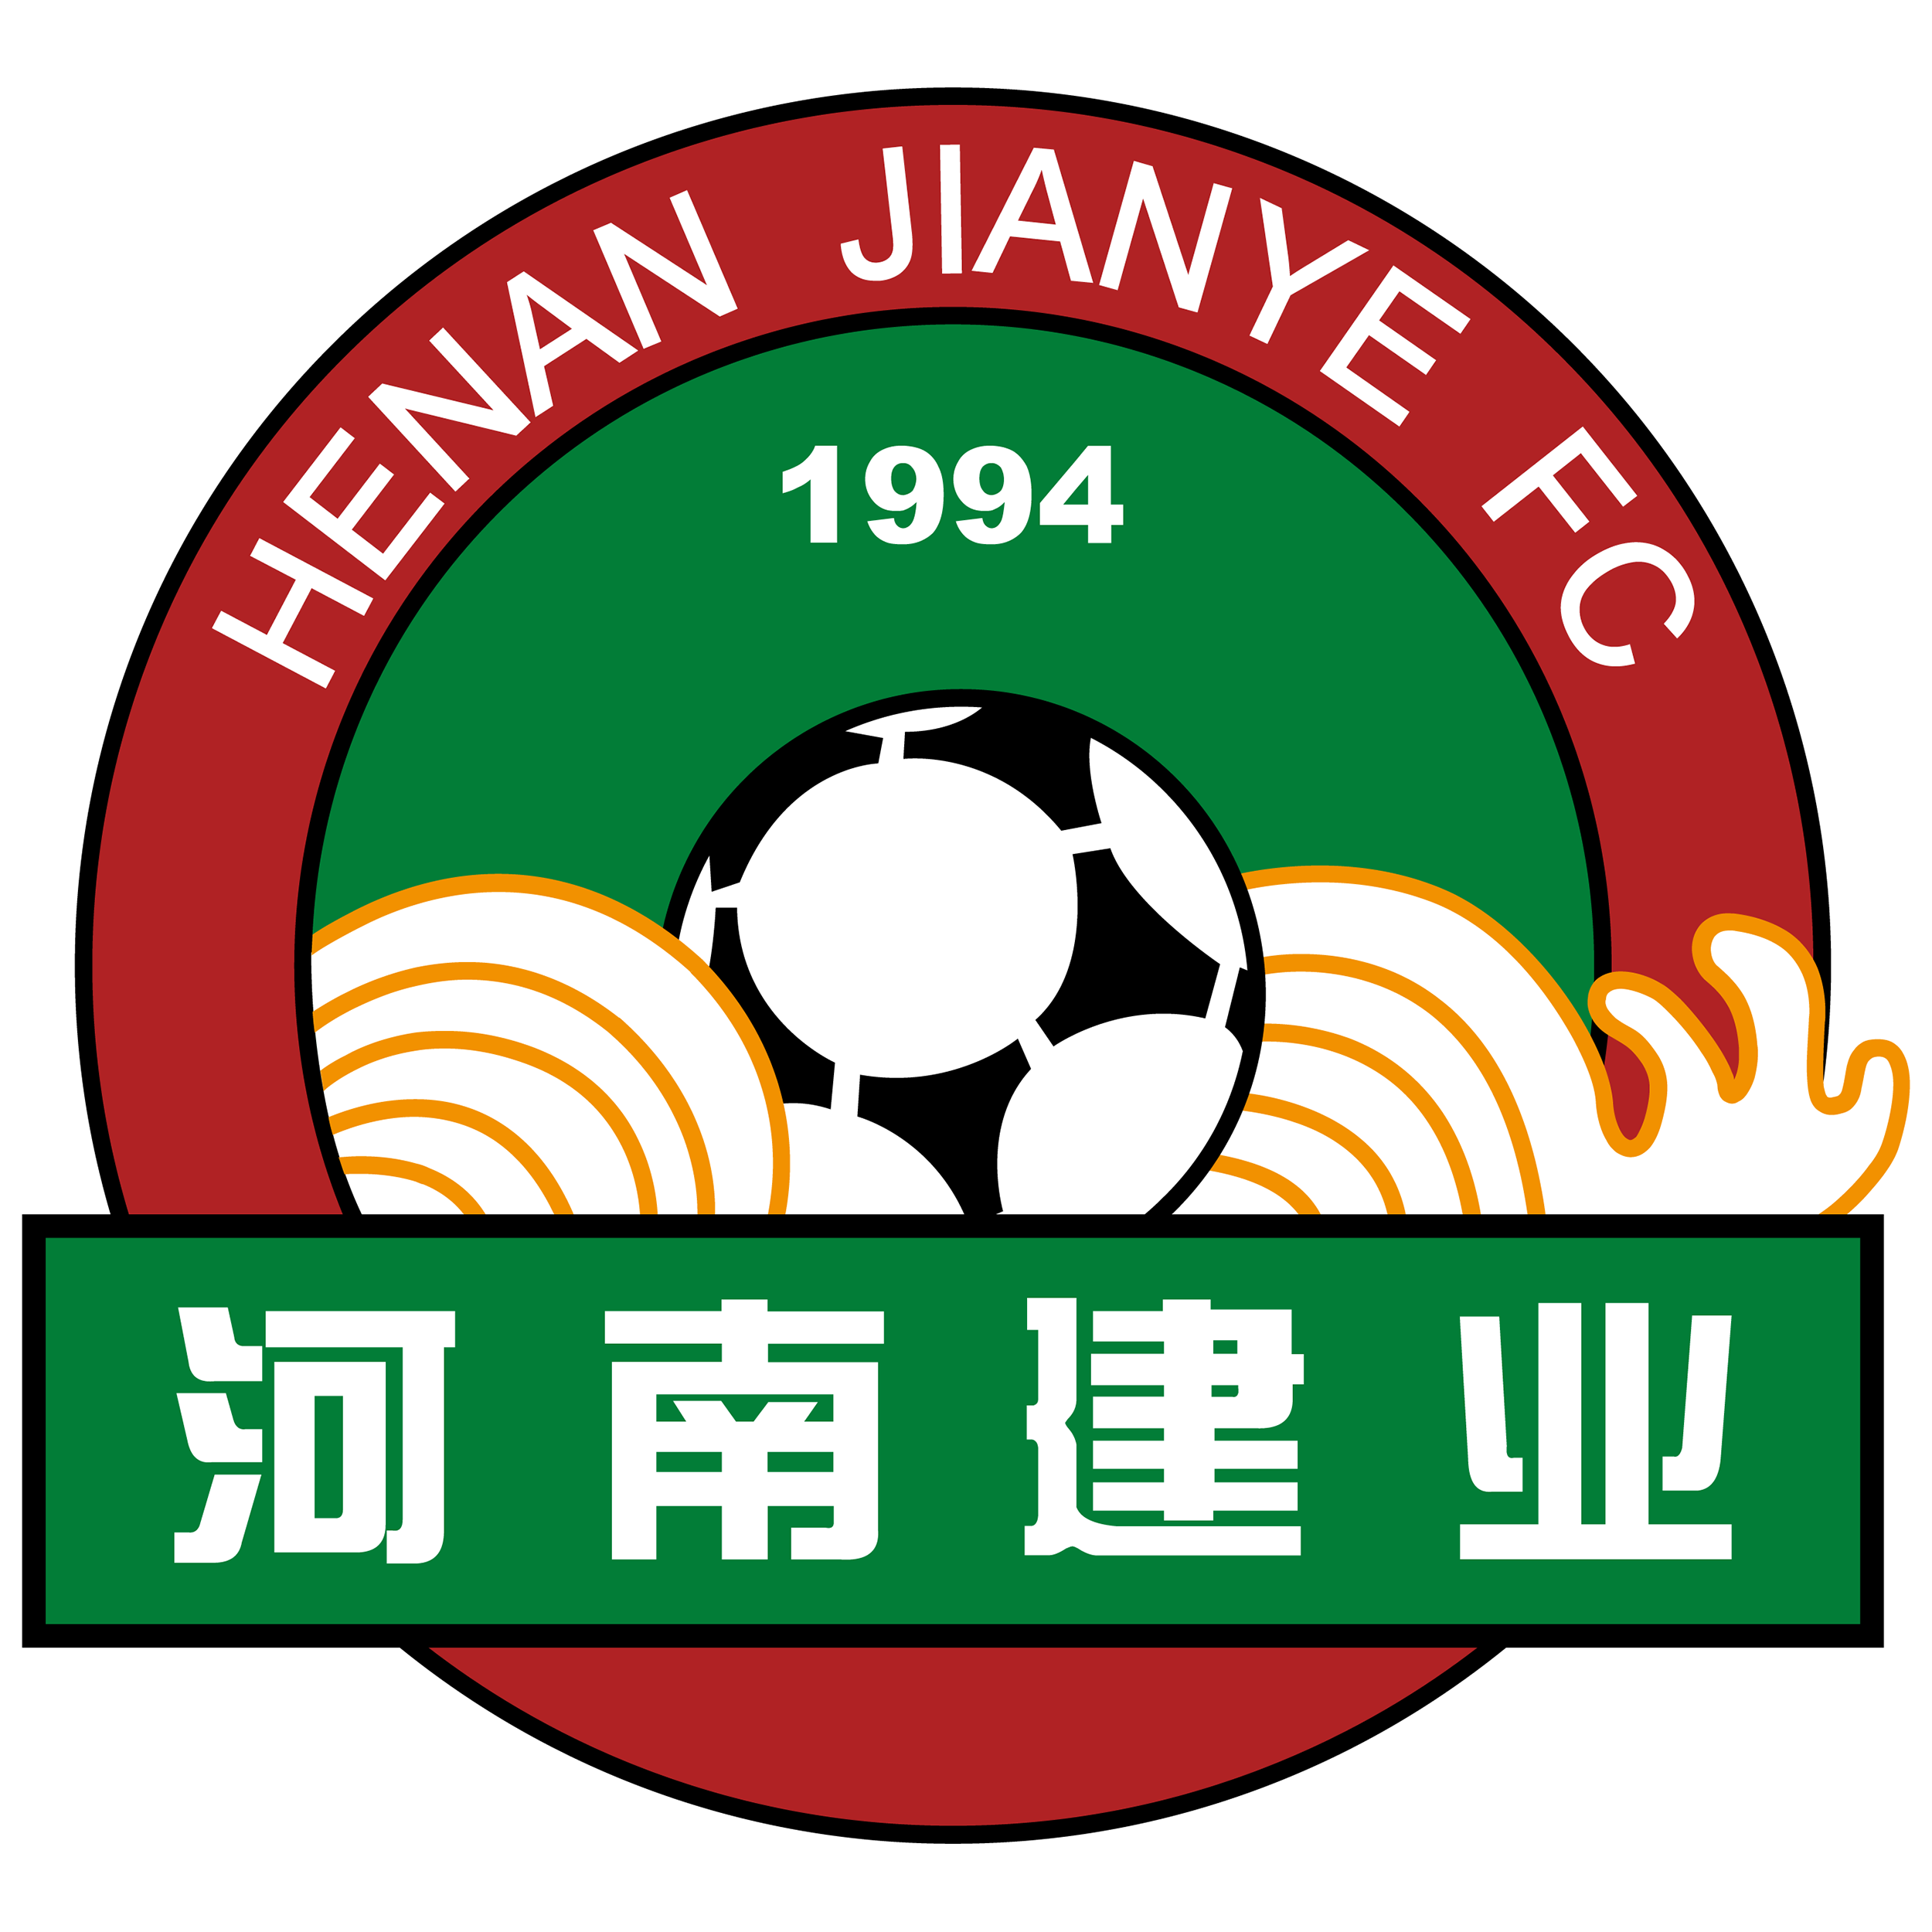 Henan Jianye vs Beijing Guoan Pronóstico: Duro partido entre dos equipos igualados.